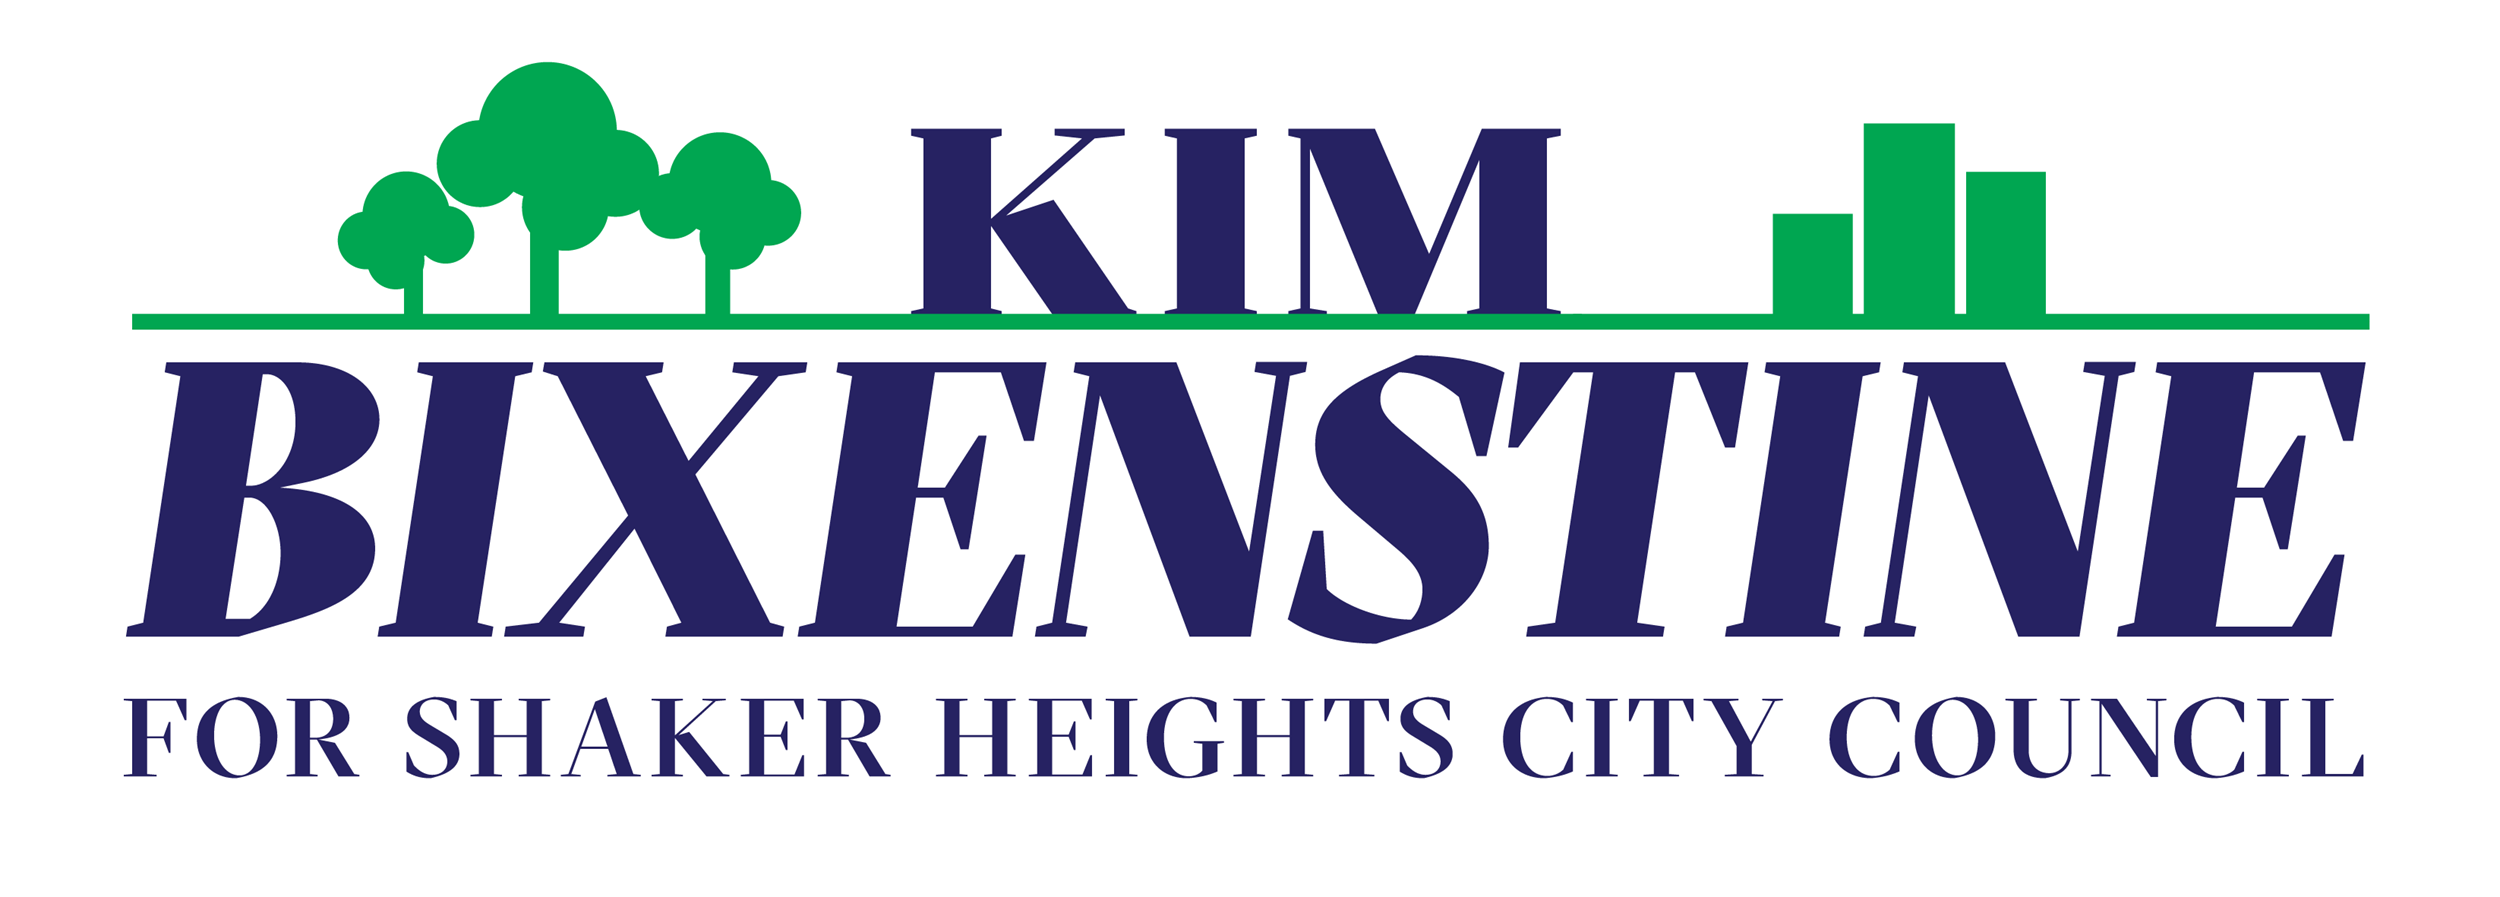 Kim Bixenstine for Shaker Heights City Council